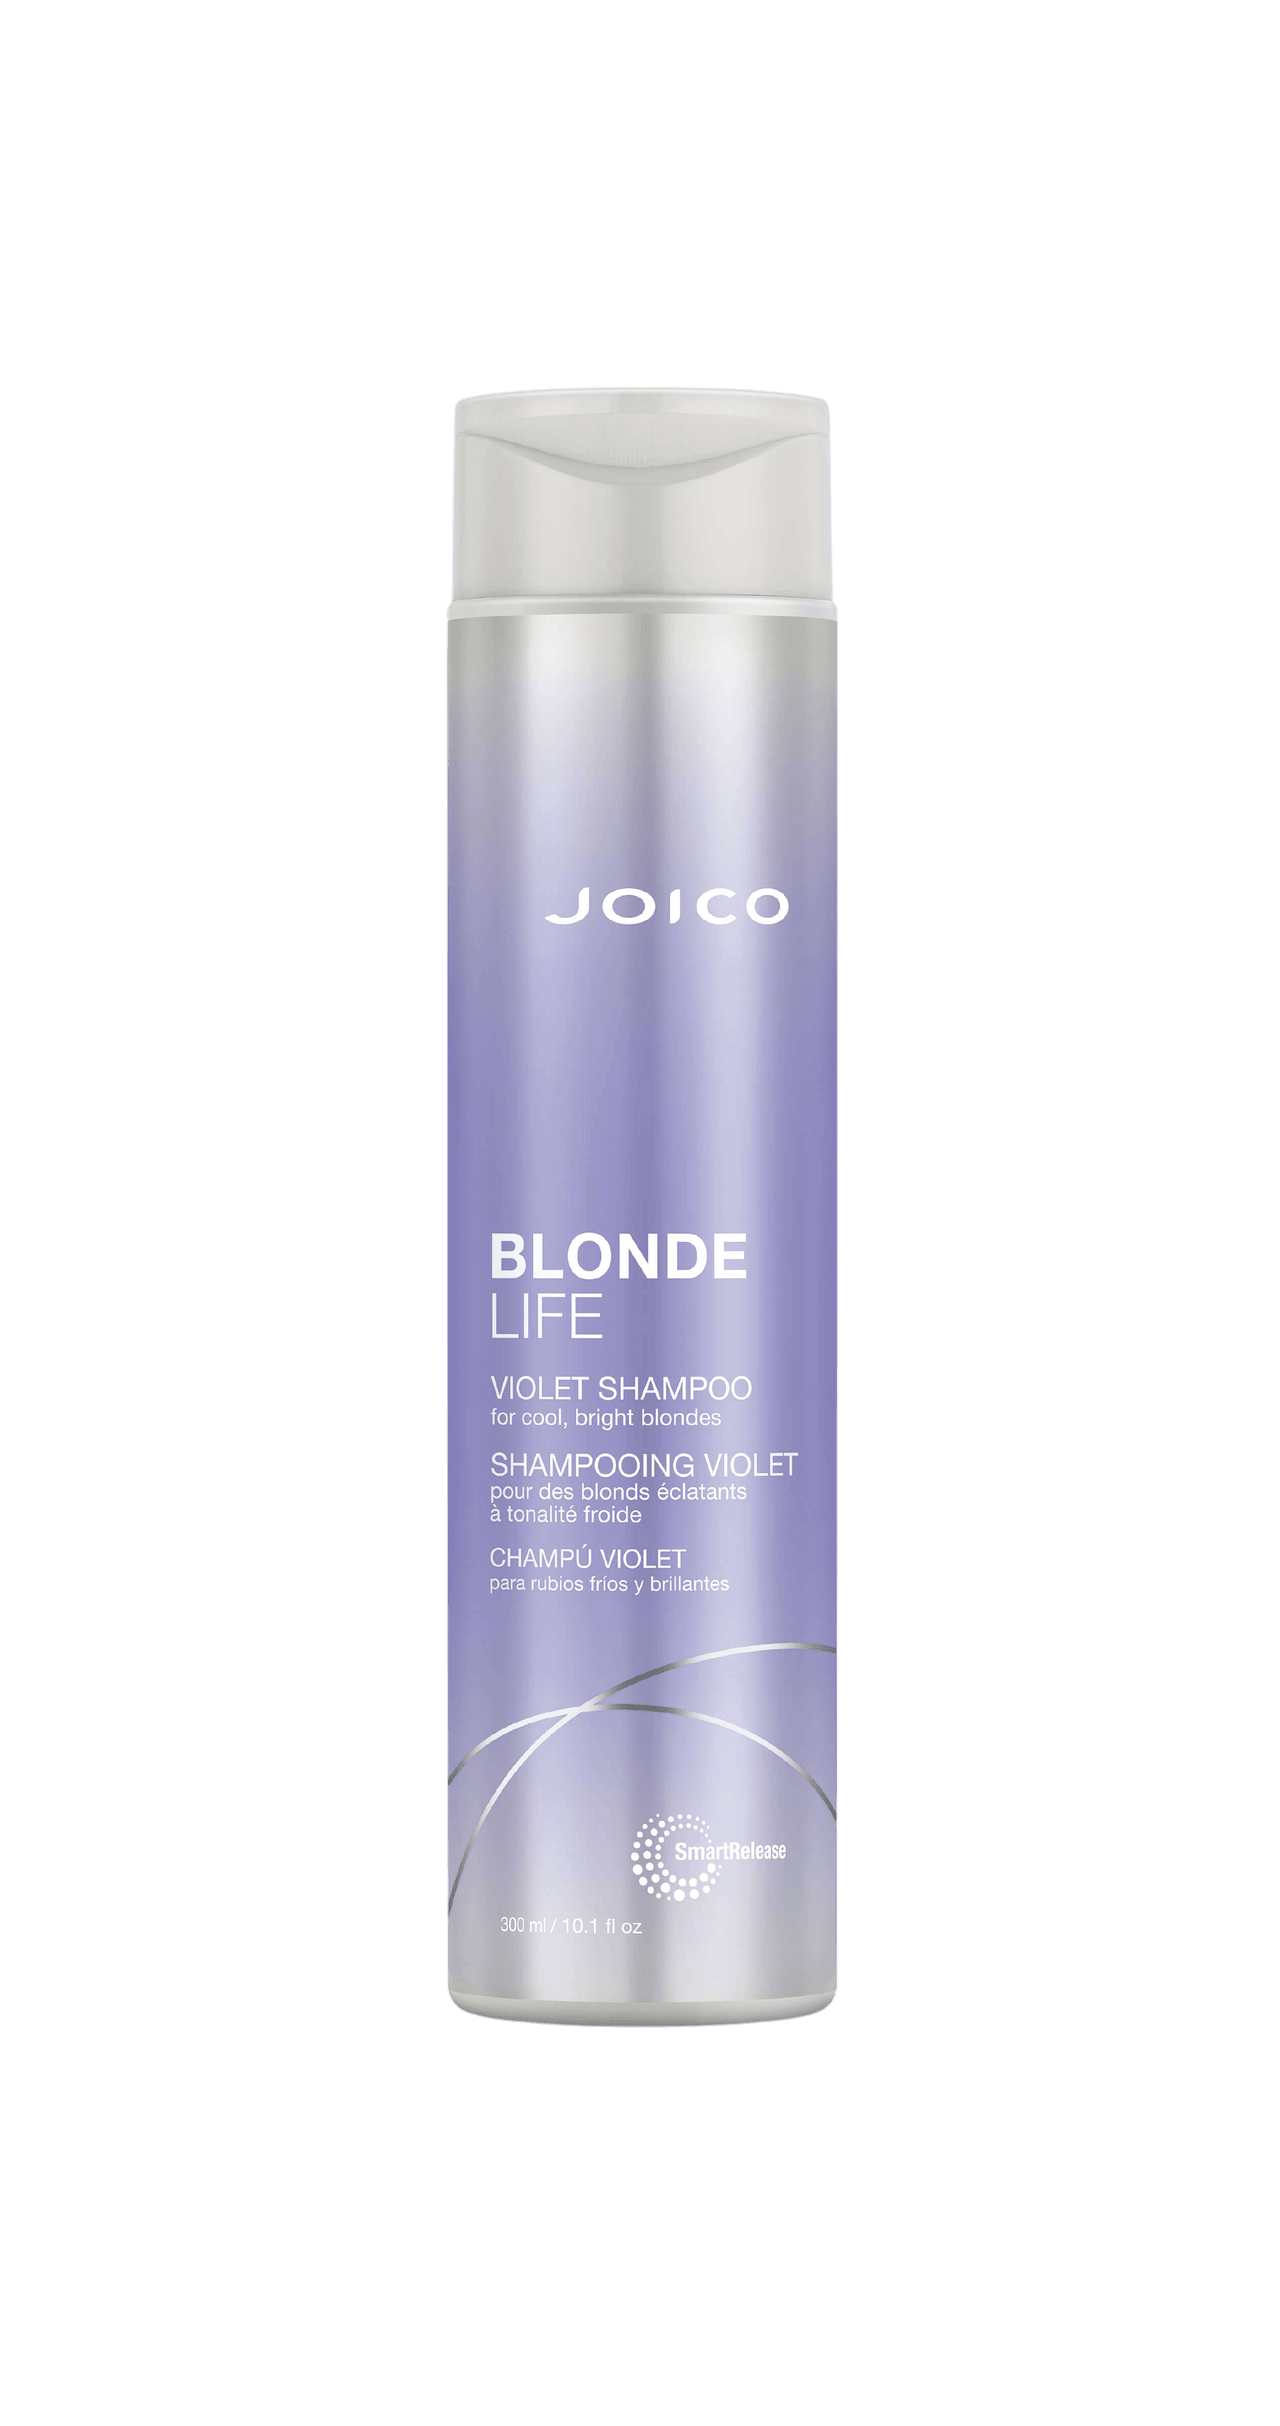 Joico Blonde Life Violet Shampoo 300mL Bottle